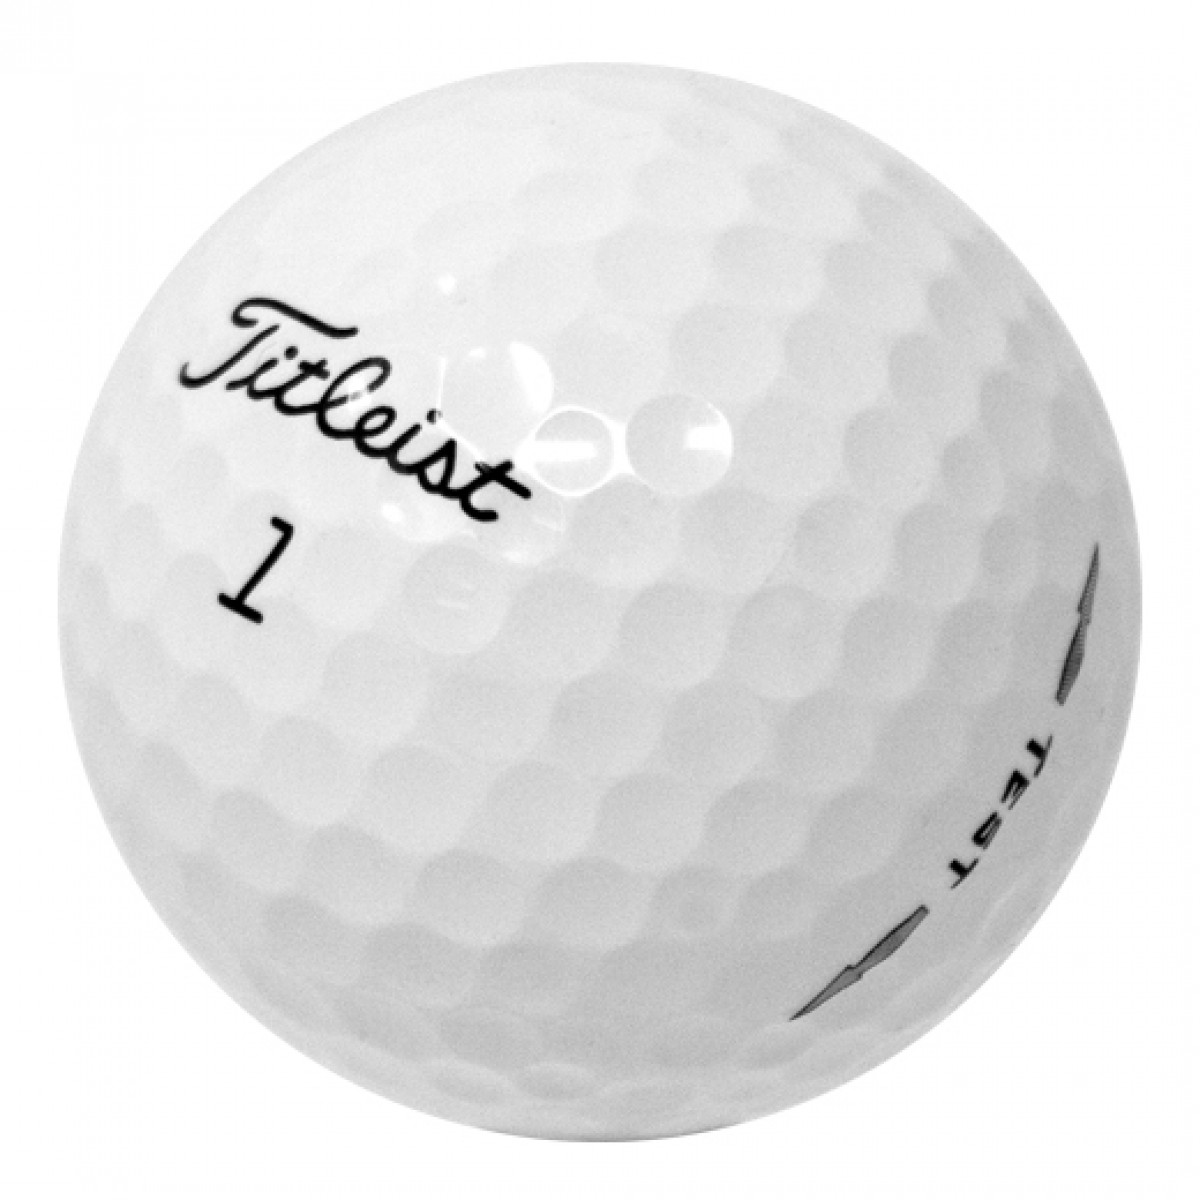 Titleist Pro V1 Test Golf Balls - 1 Dozen